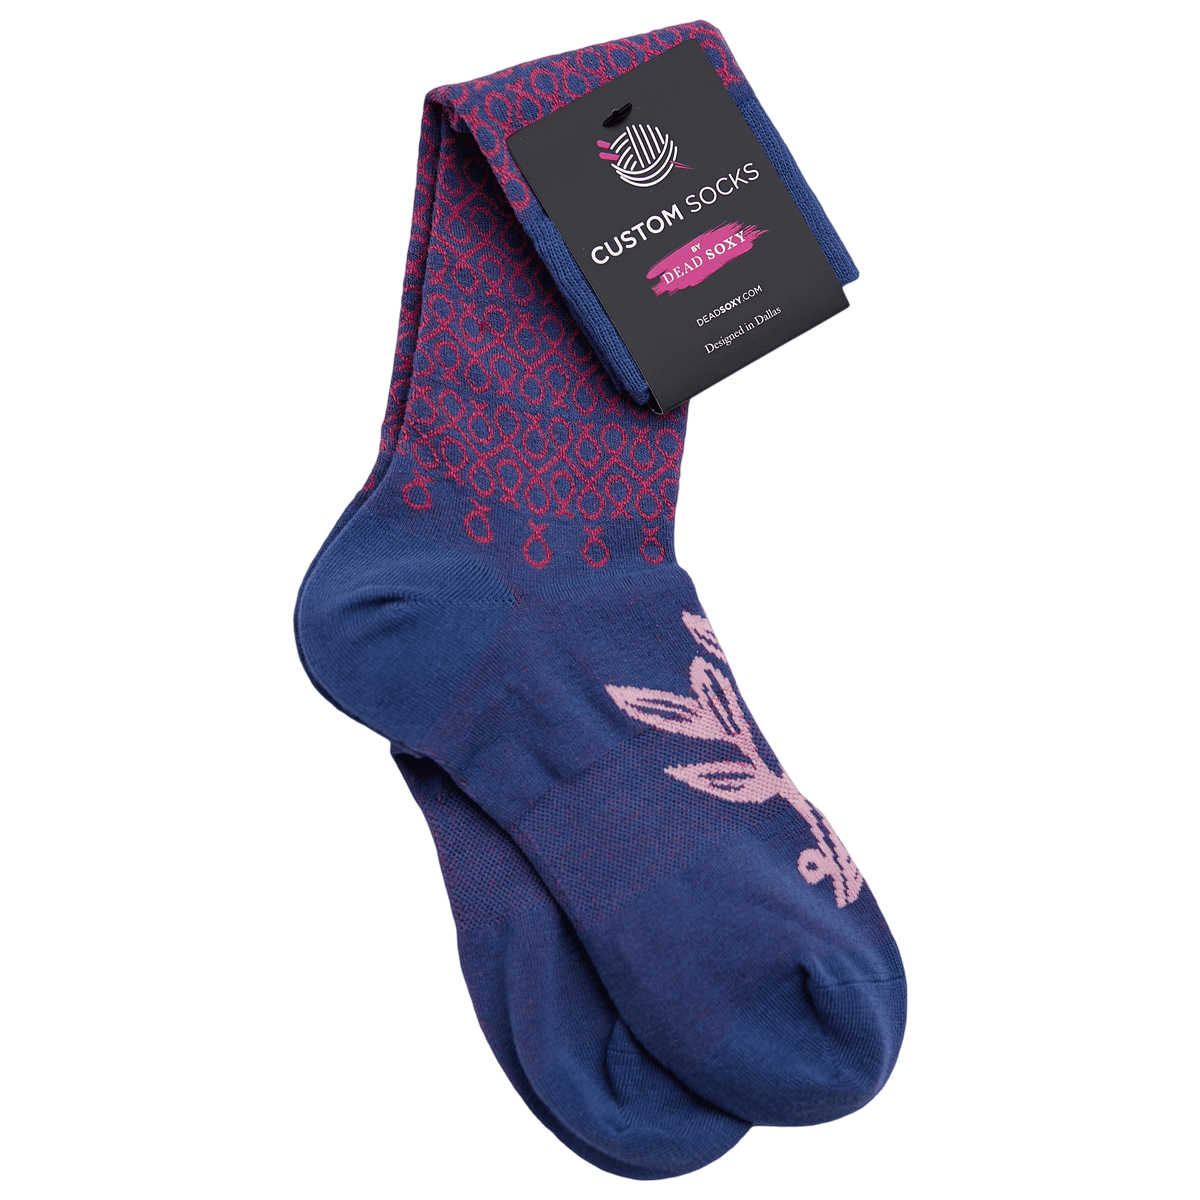 NBCF Collab Socks  Premium Socks that Make a Difference